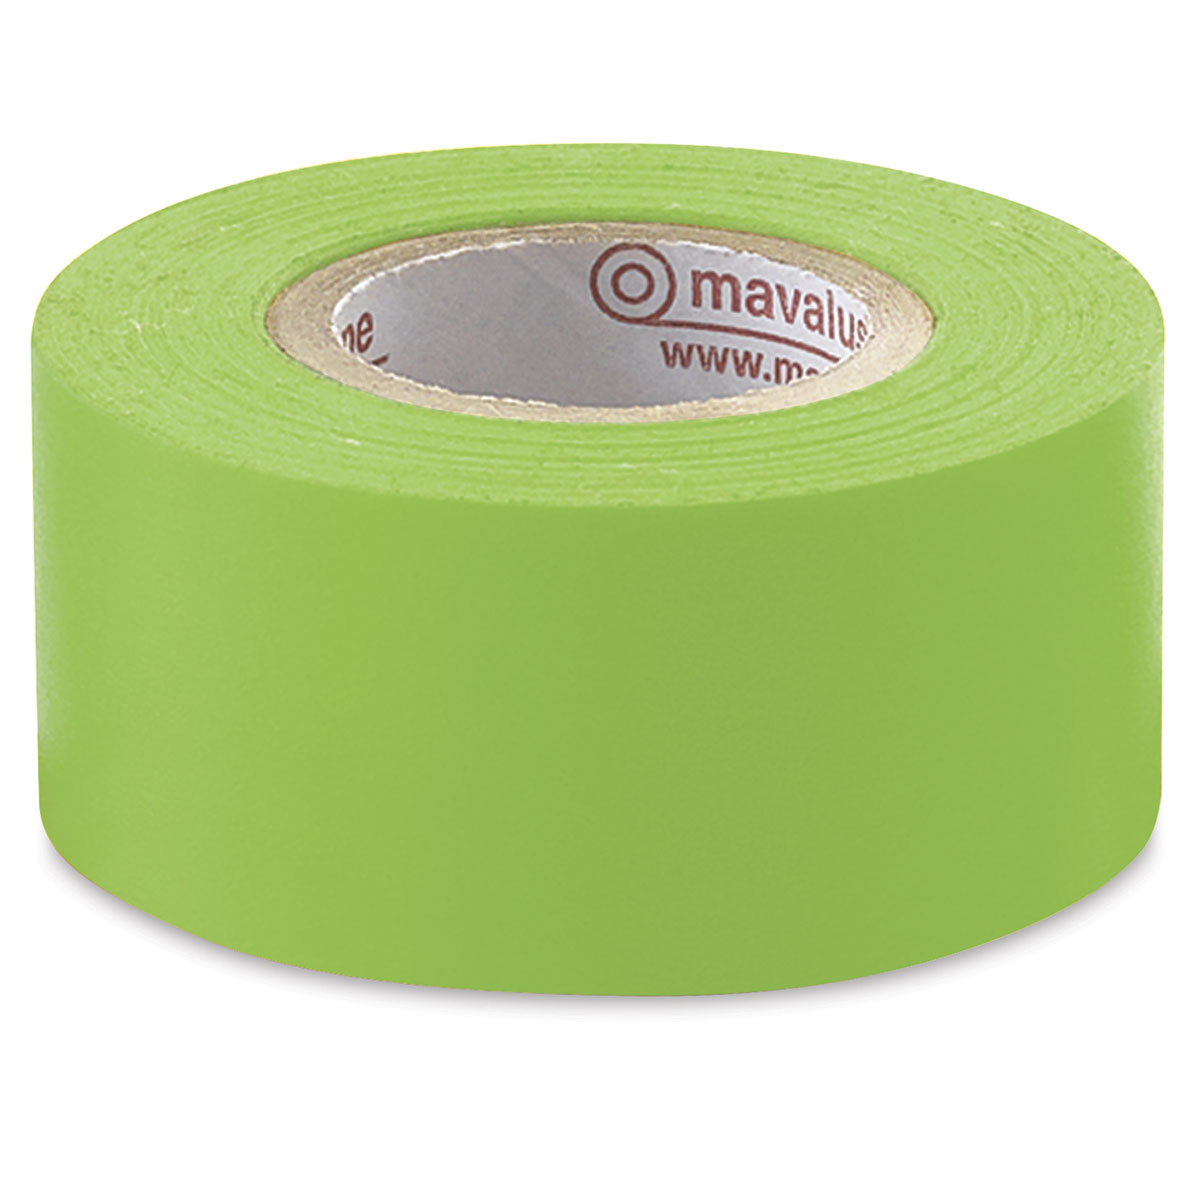 Mavalus Tape, Green, 1 x 27 ft